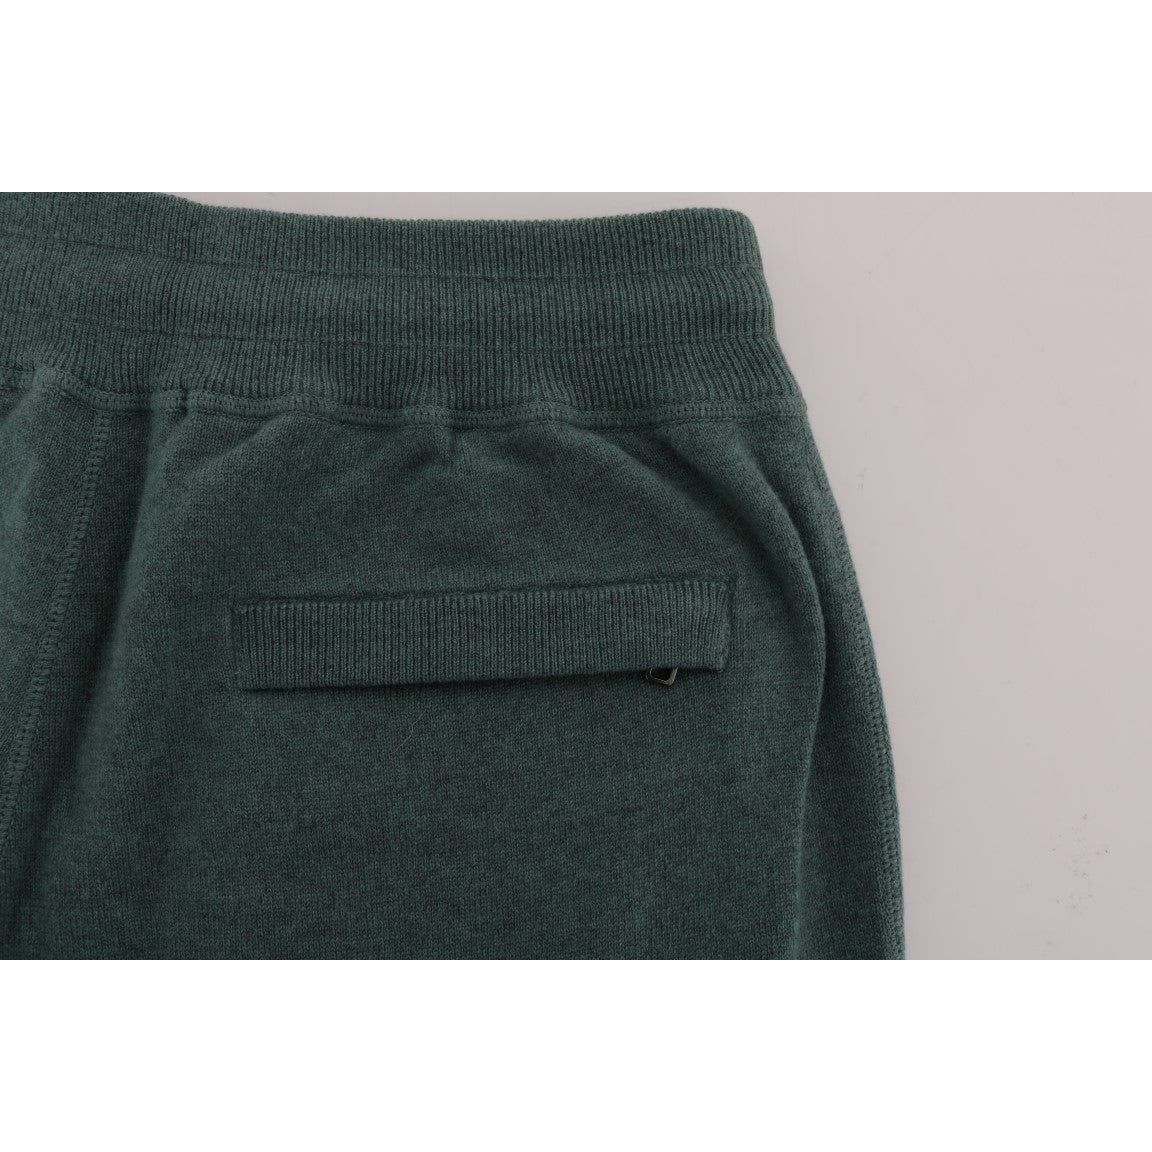 Dolce & Gabbana Elegant Green Cashmere Sport Pants green-cashmere-training-pants